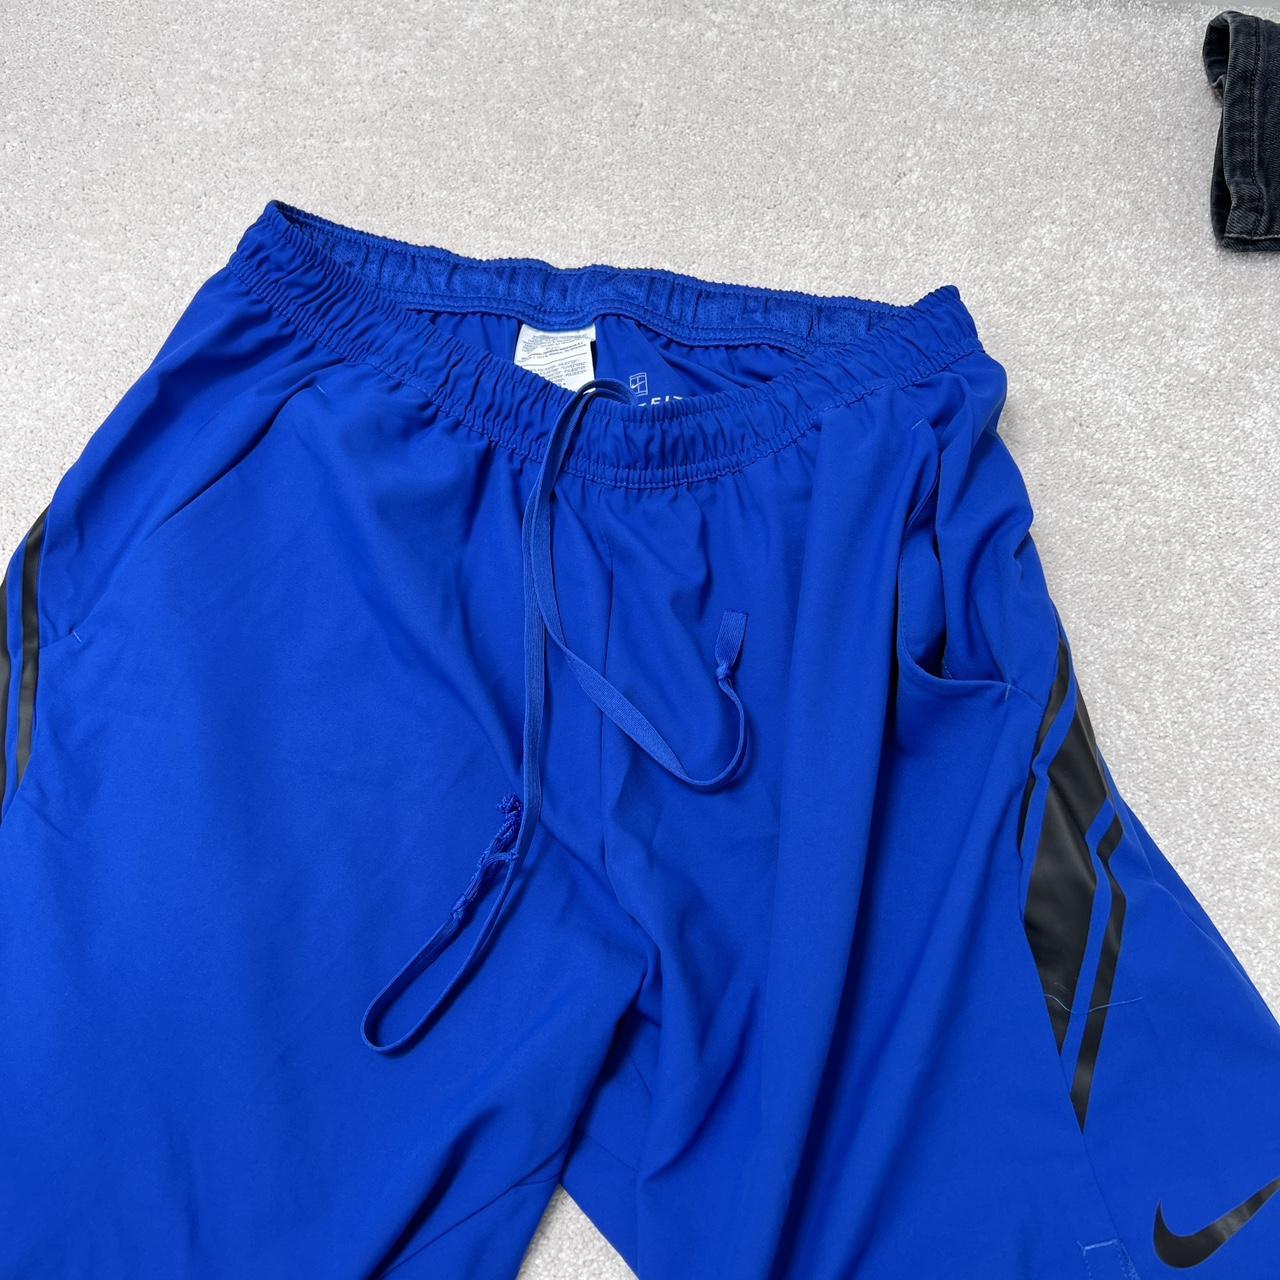 Nike fri fit tennis shorts - Depop